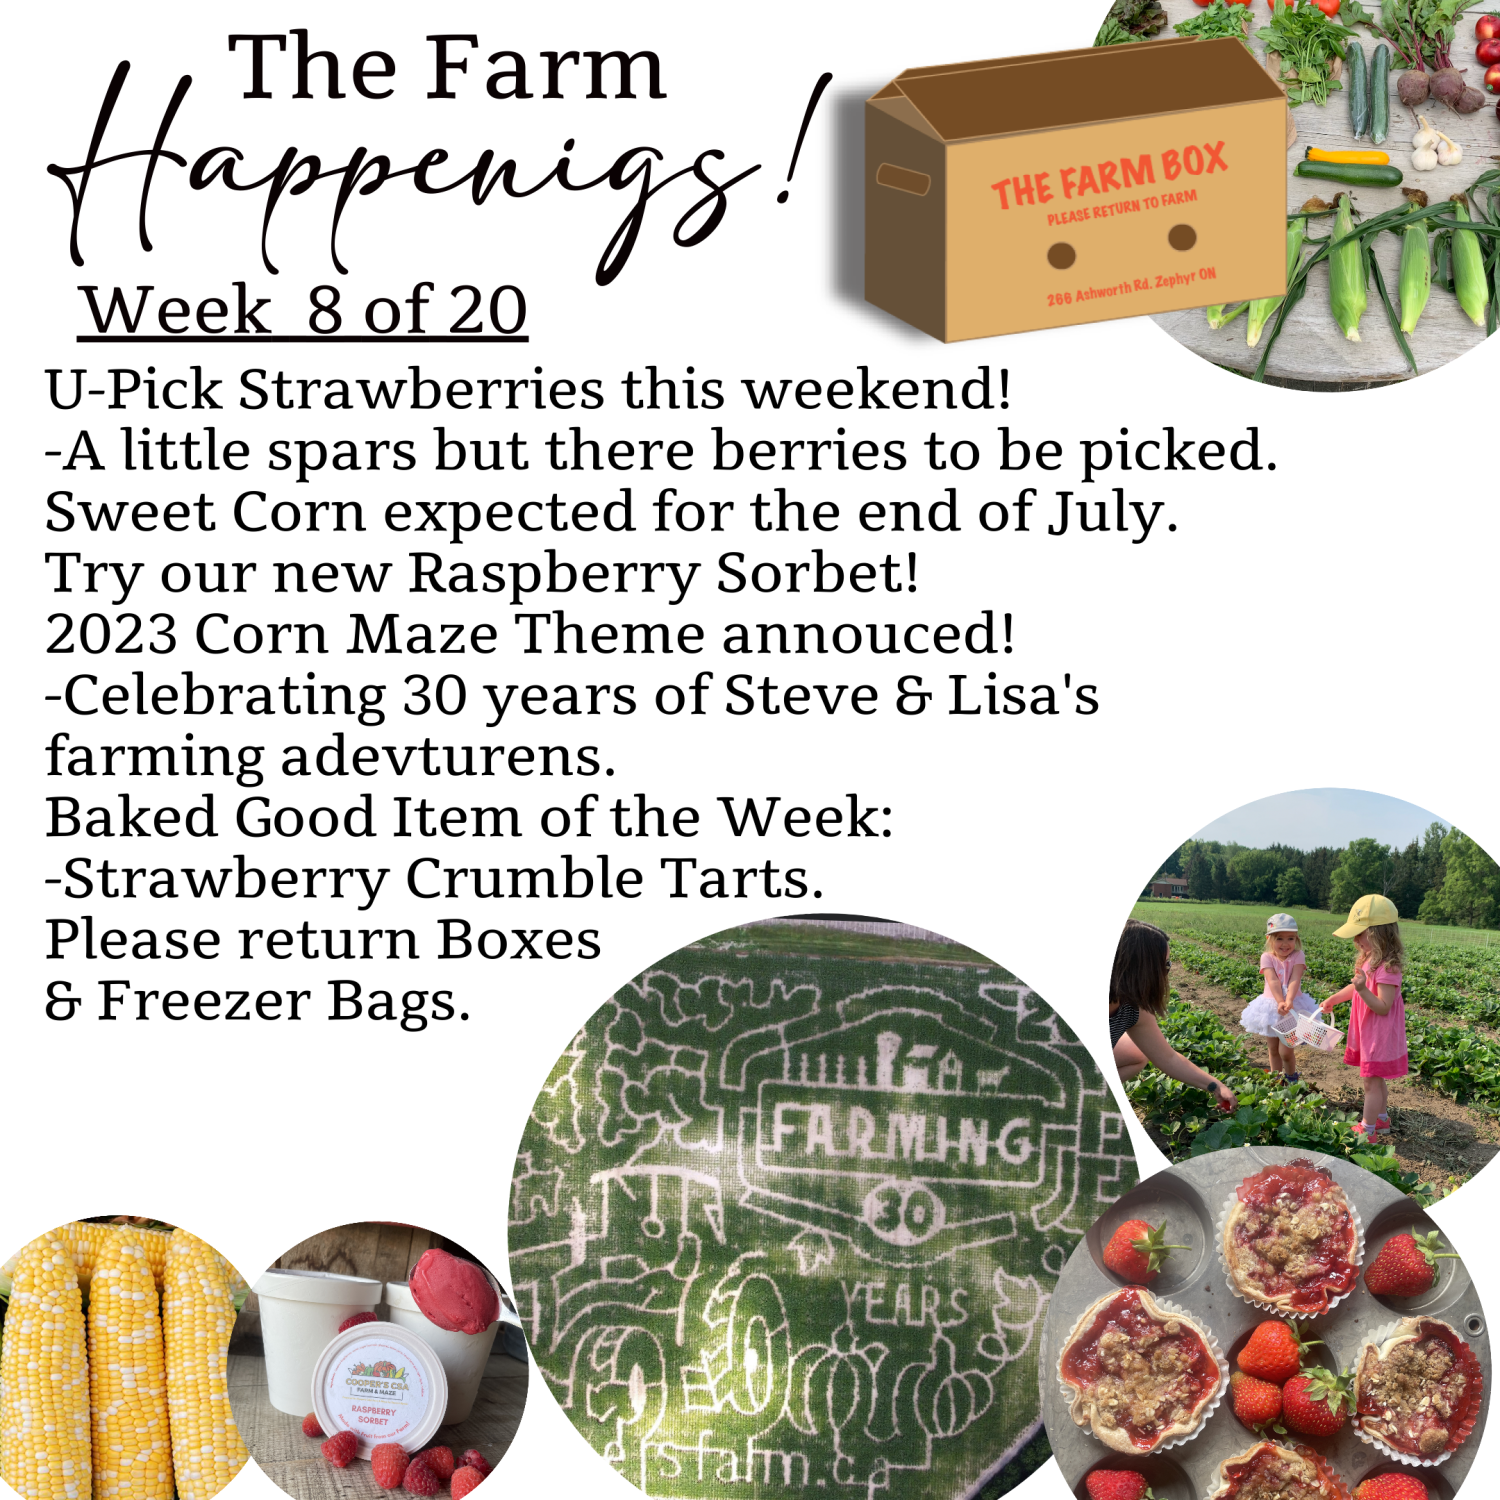 Previous Happening: "The Farm Box"-Coopers CSA Farm Farm Happenings Week 8